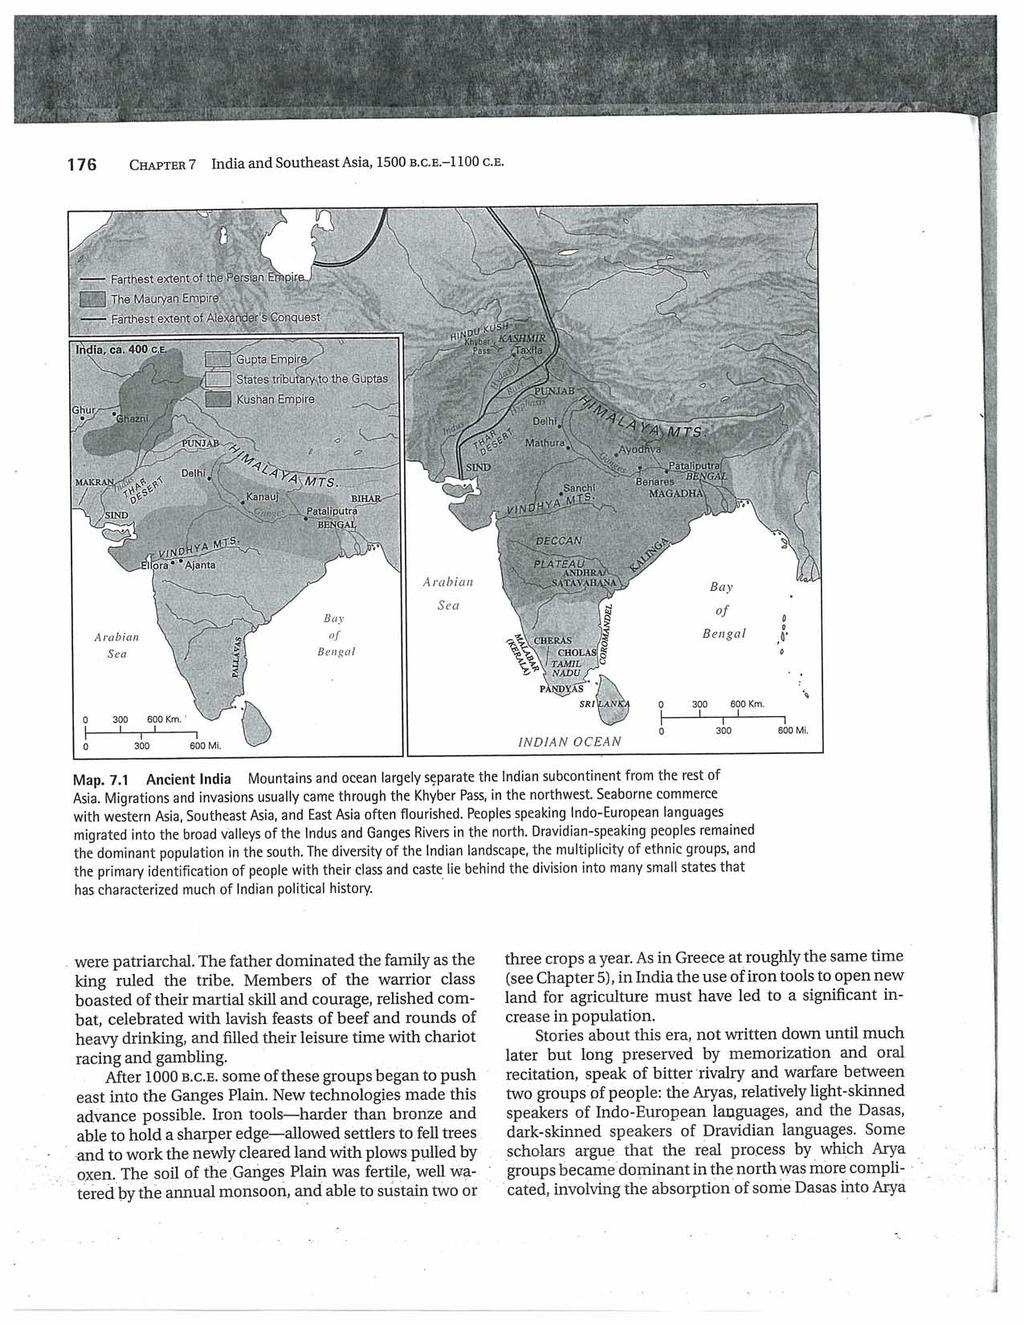 1 76 CHAPTER 7 India and Southeast Asia, 1500 B.c.E.-1100 C.E. Farthest extent of the Persian Ernpir The Mauryan Empire Farthest extent of Alexander's Conquest India, ca. 400 c.e. Gupta EmO ire) States tribucy,to the Guptas Kushan Empire KUSH' j4iii 0 1/ ' ',rub Khvber.